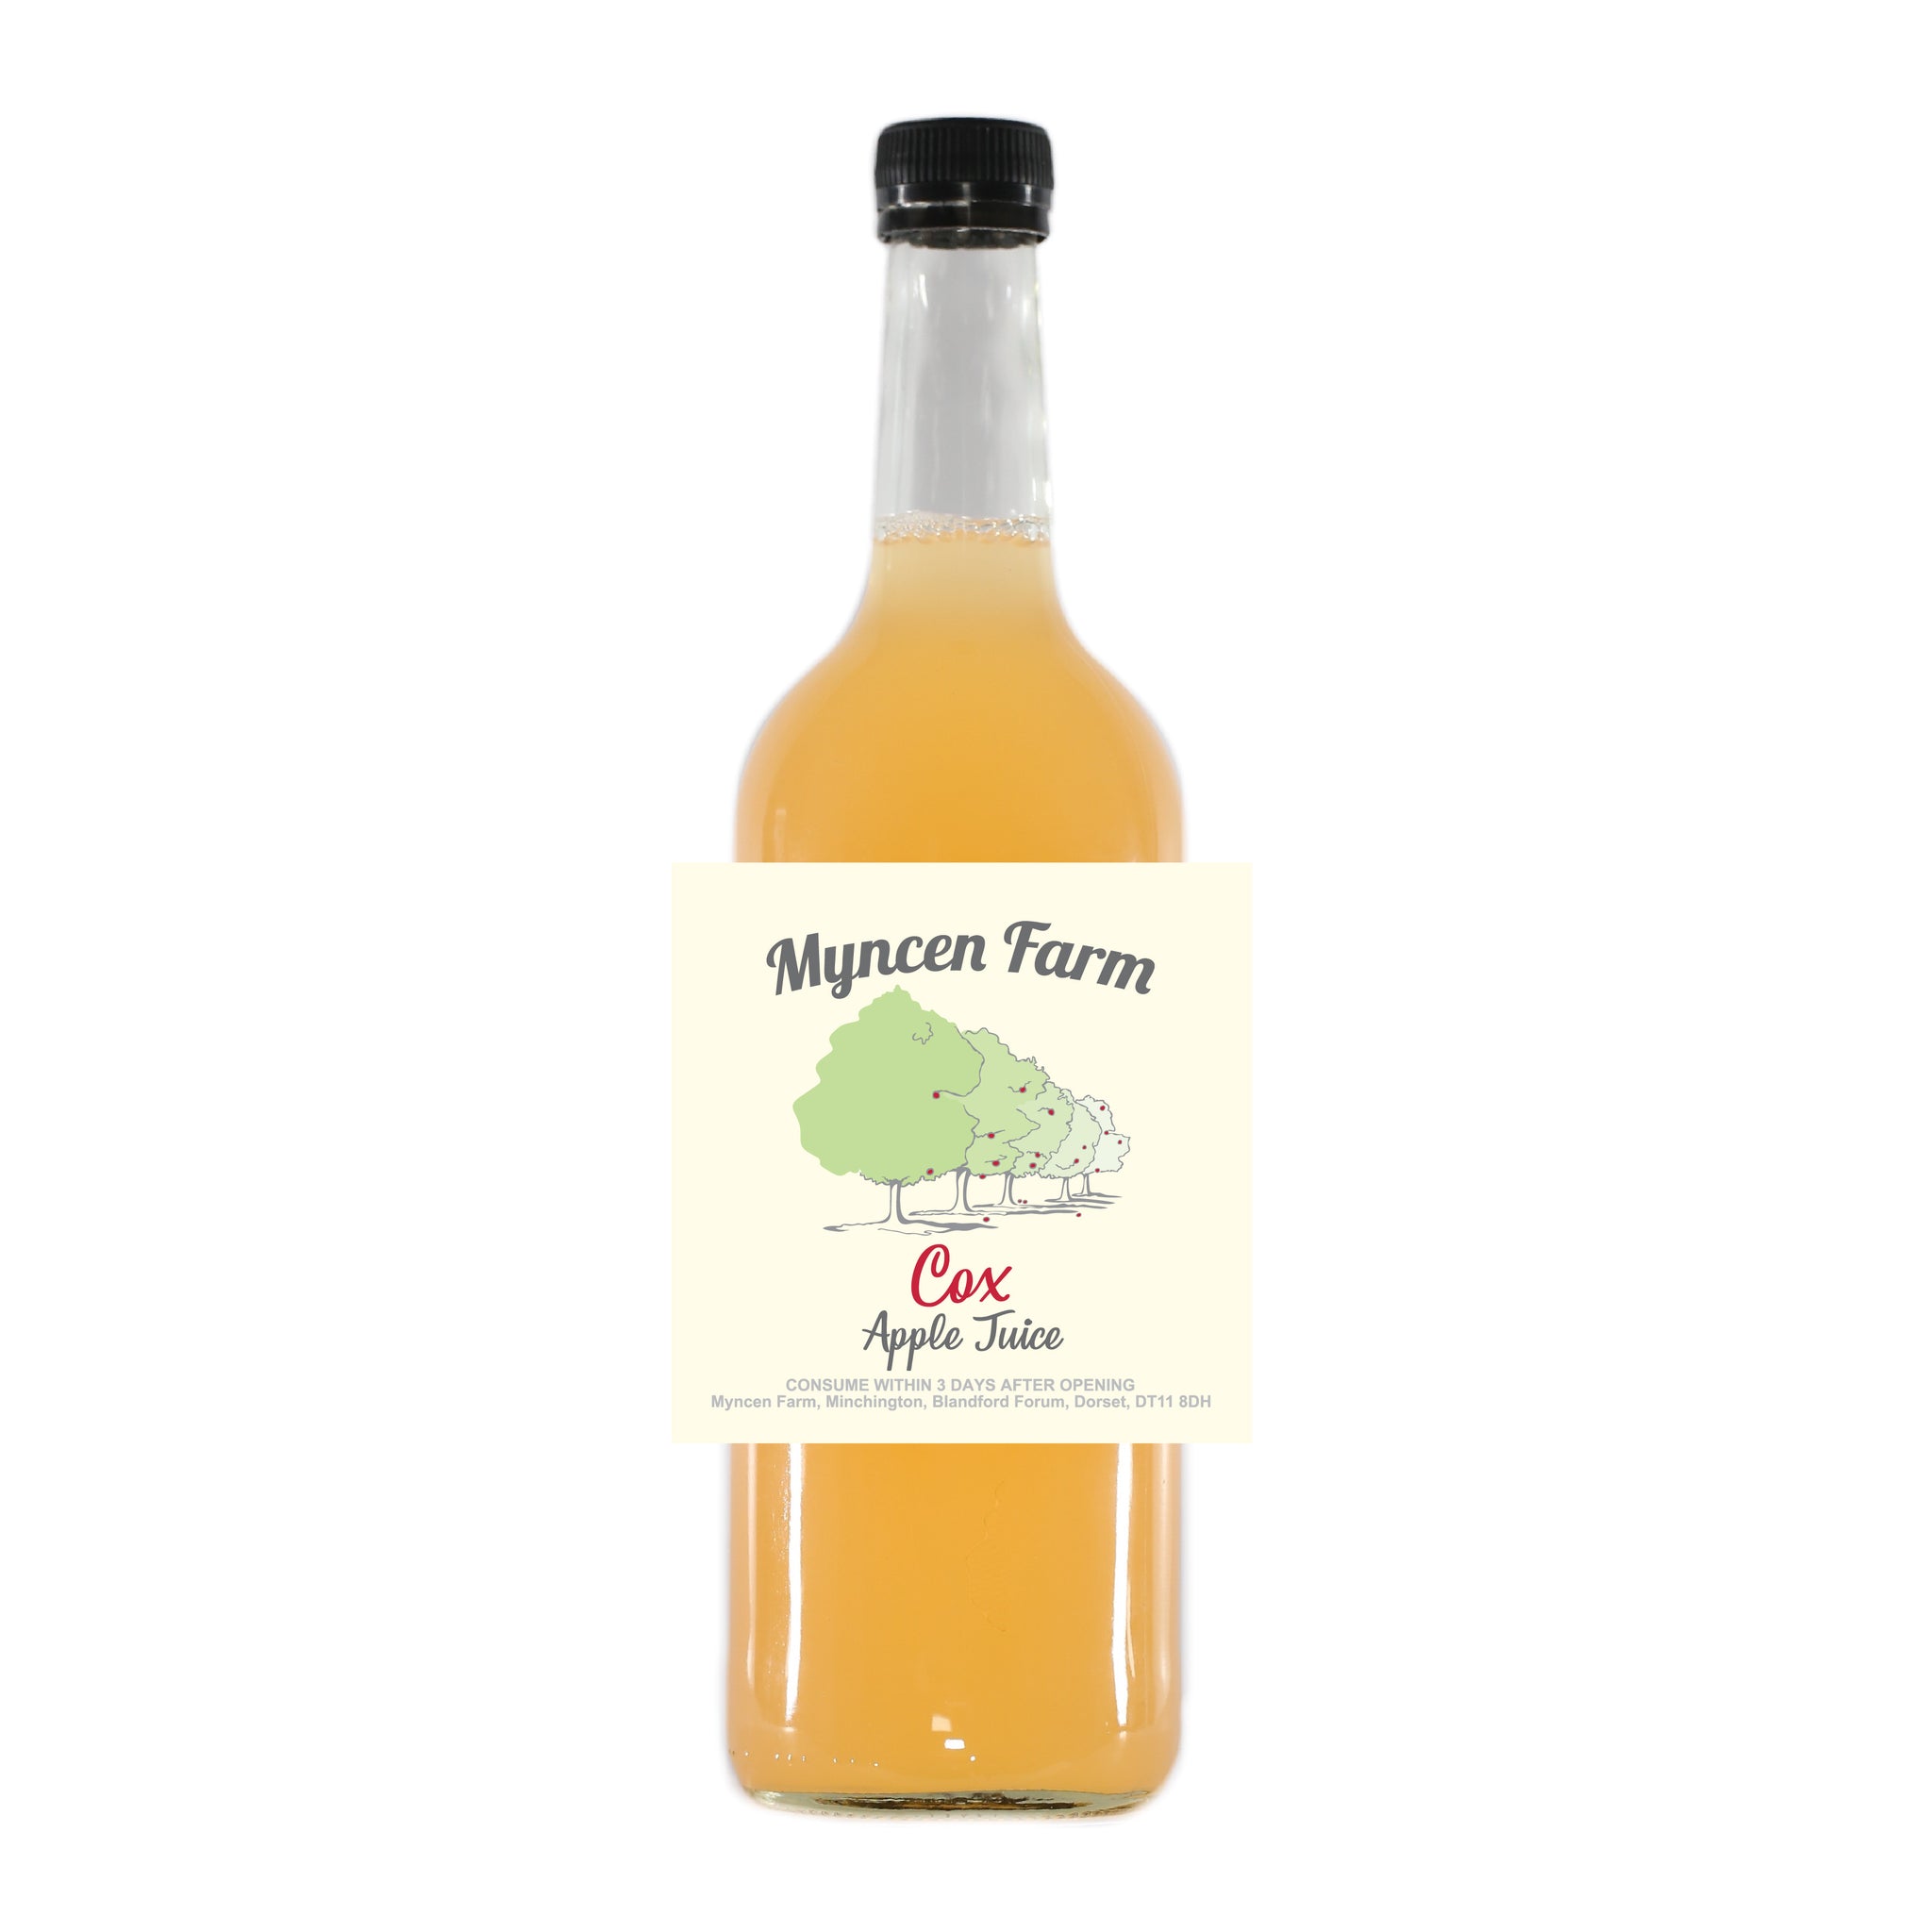 Myncen Farm 'Cox' Apple Juice (6 pack)